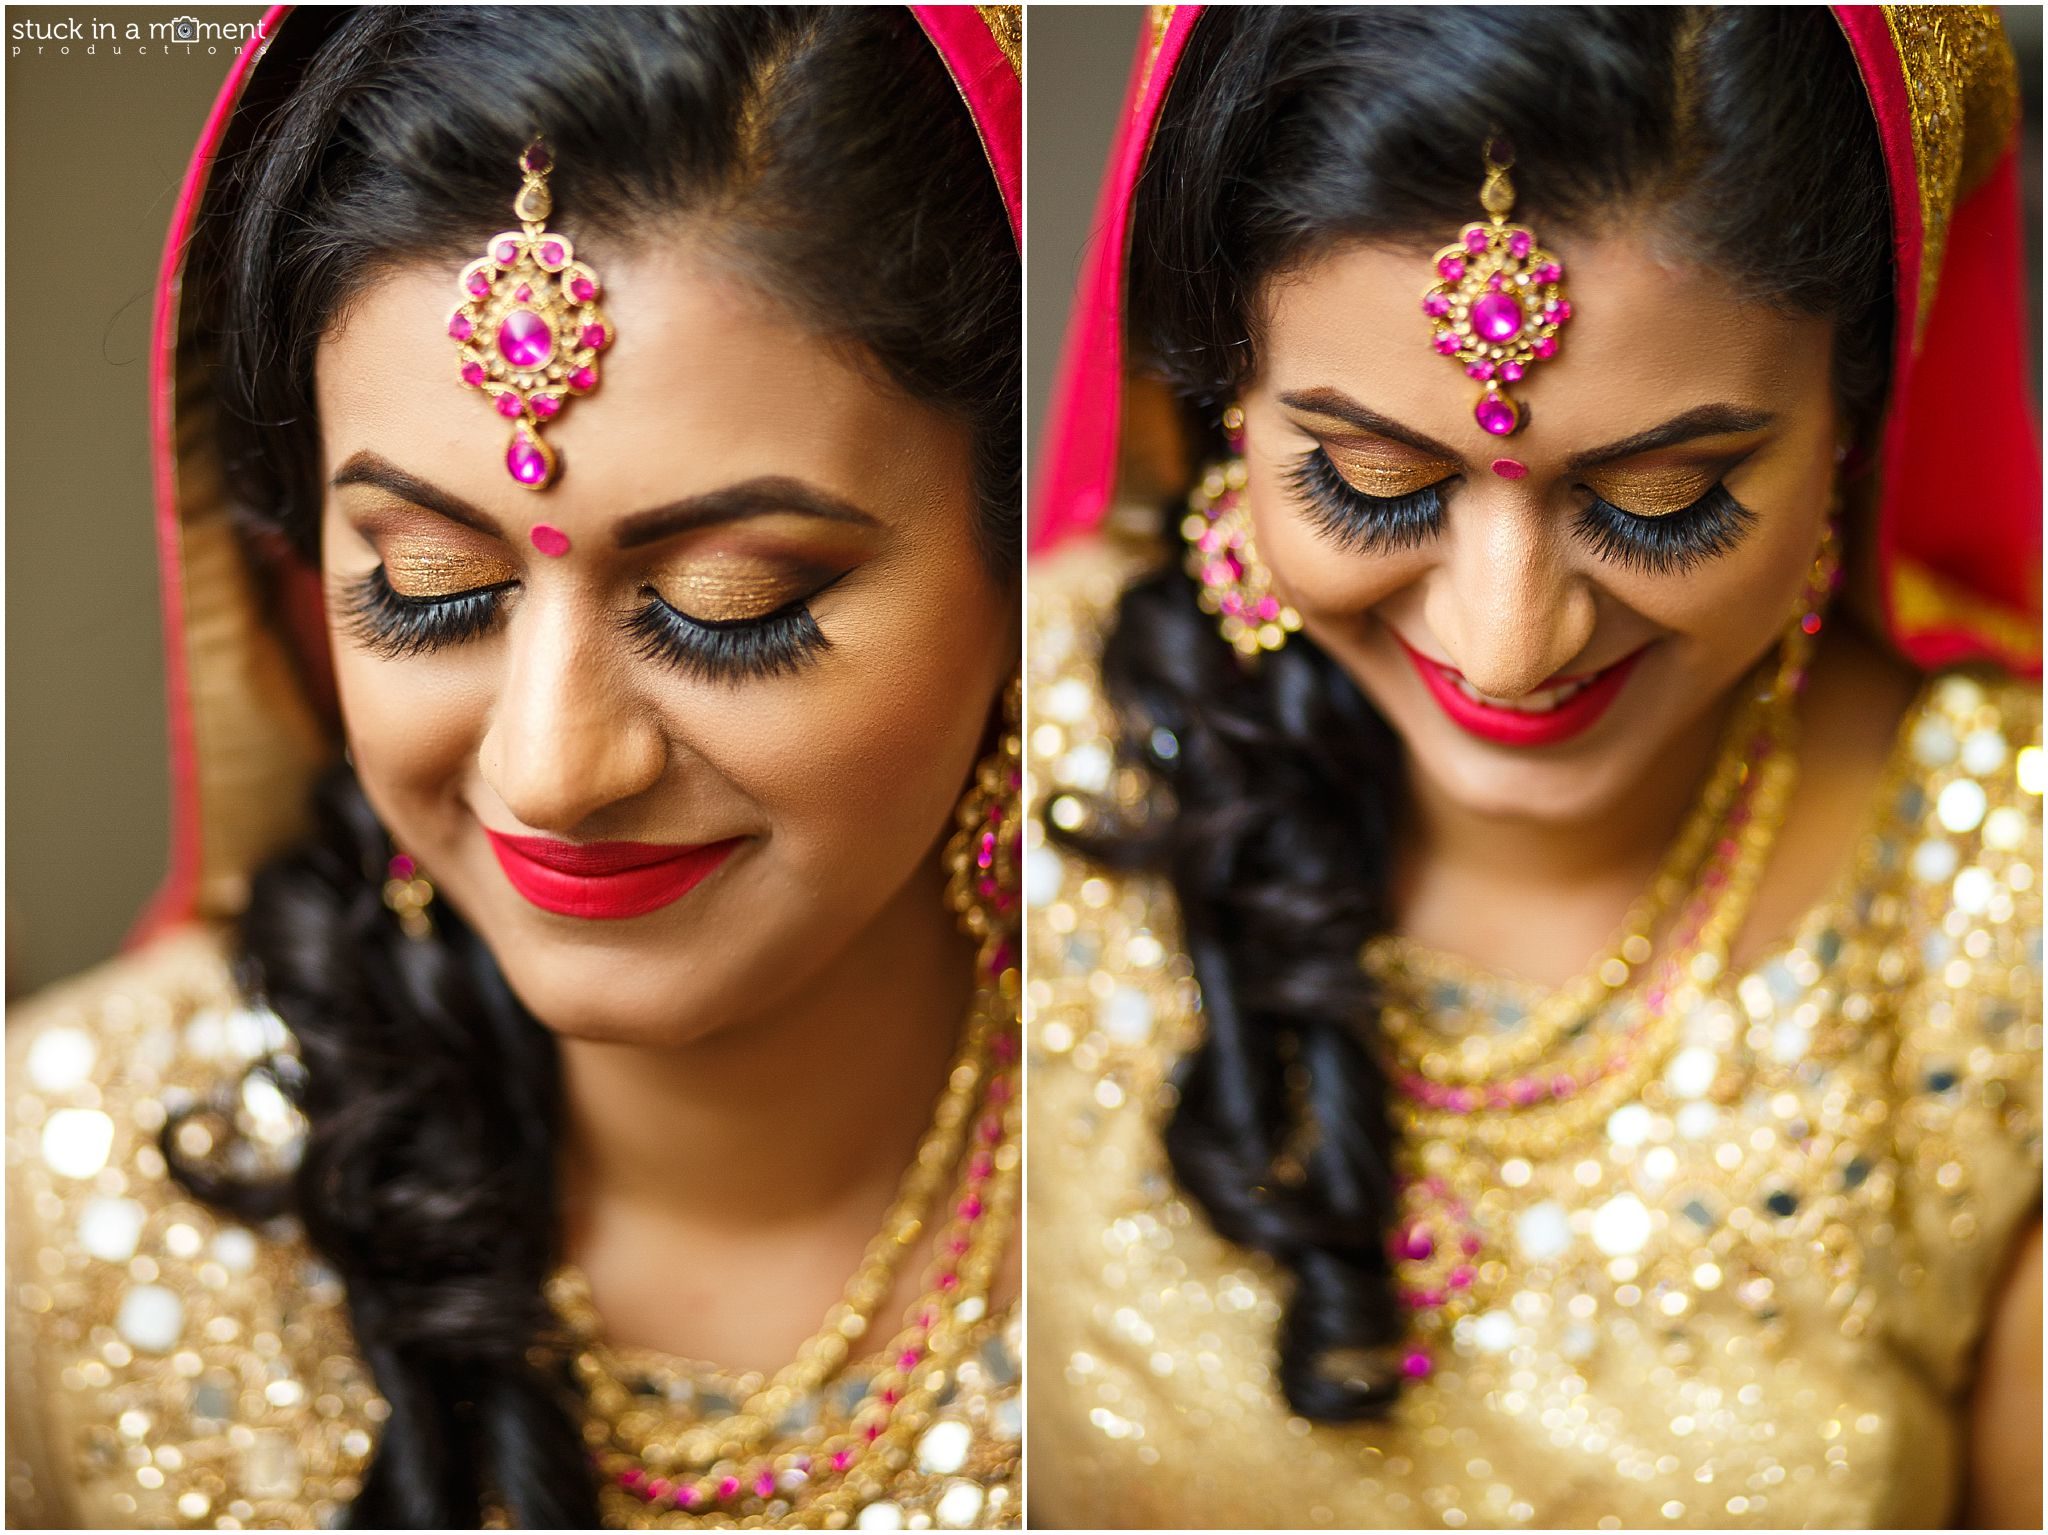 indian wedding photographer ottimo house